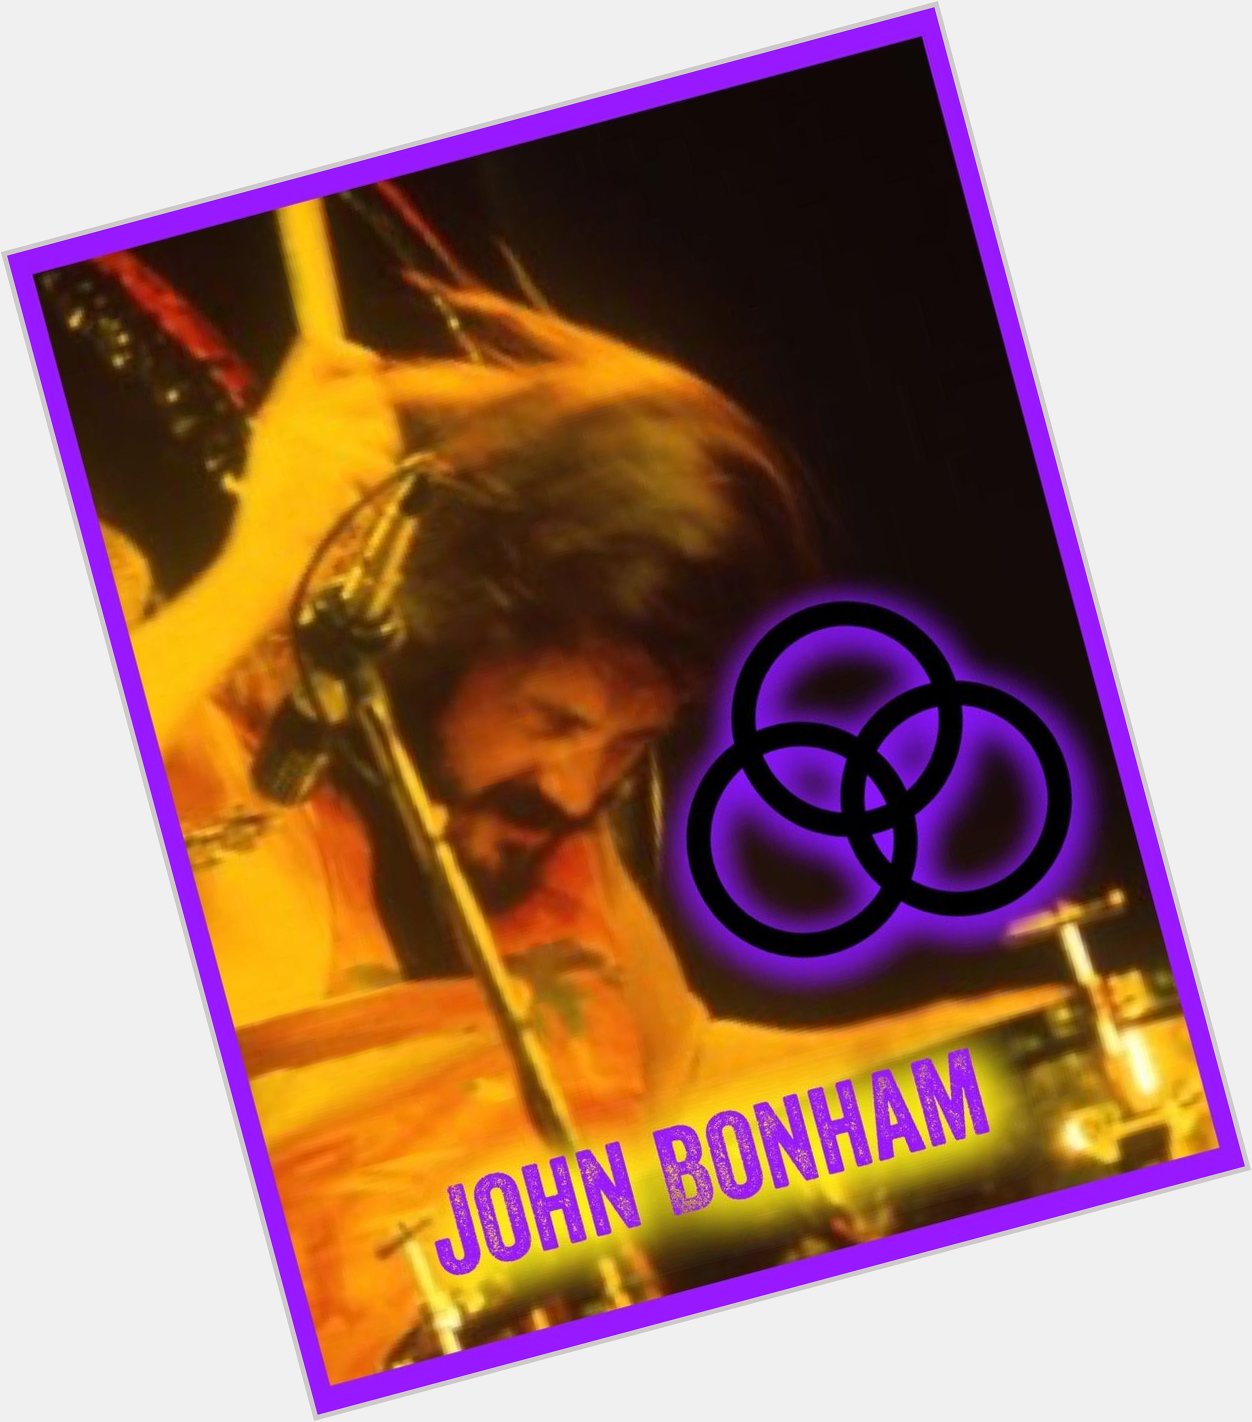 Happy Birthday in Rock Heaven 
John Bonham
Drummer Led Zeppelin
May 31, 1948 - September 25, 1980 